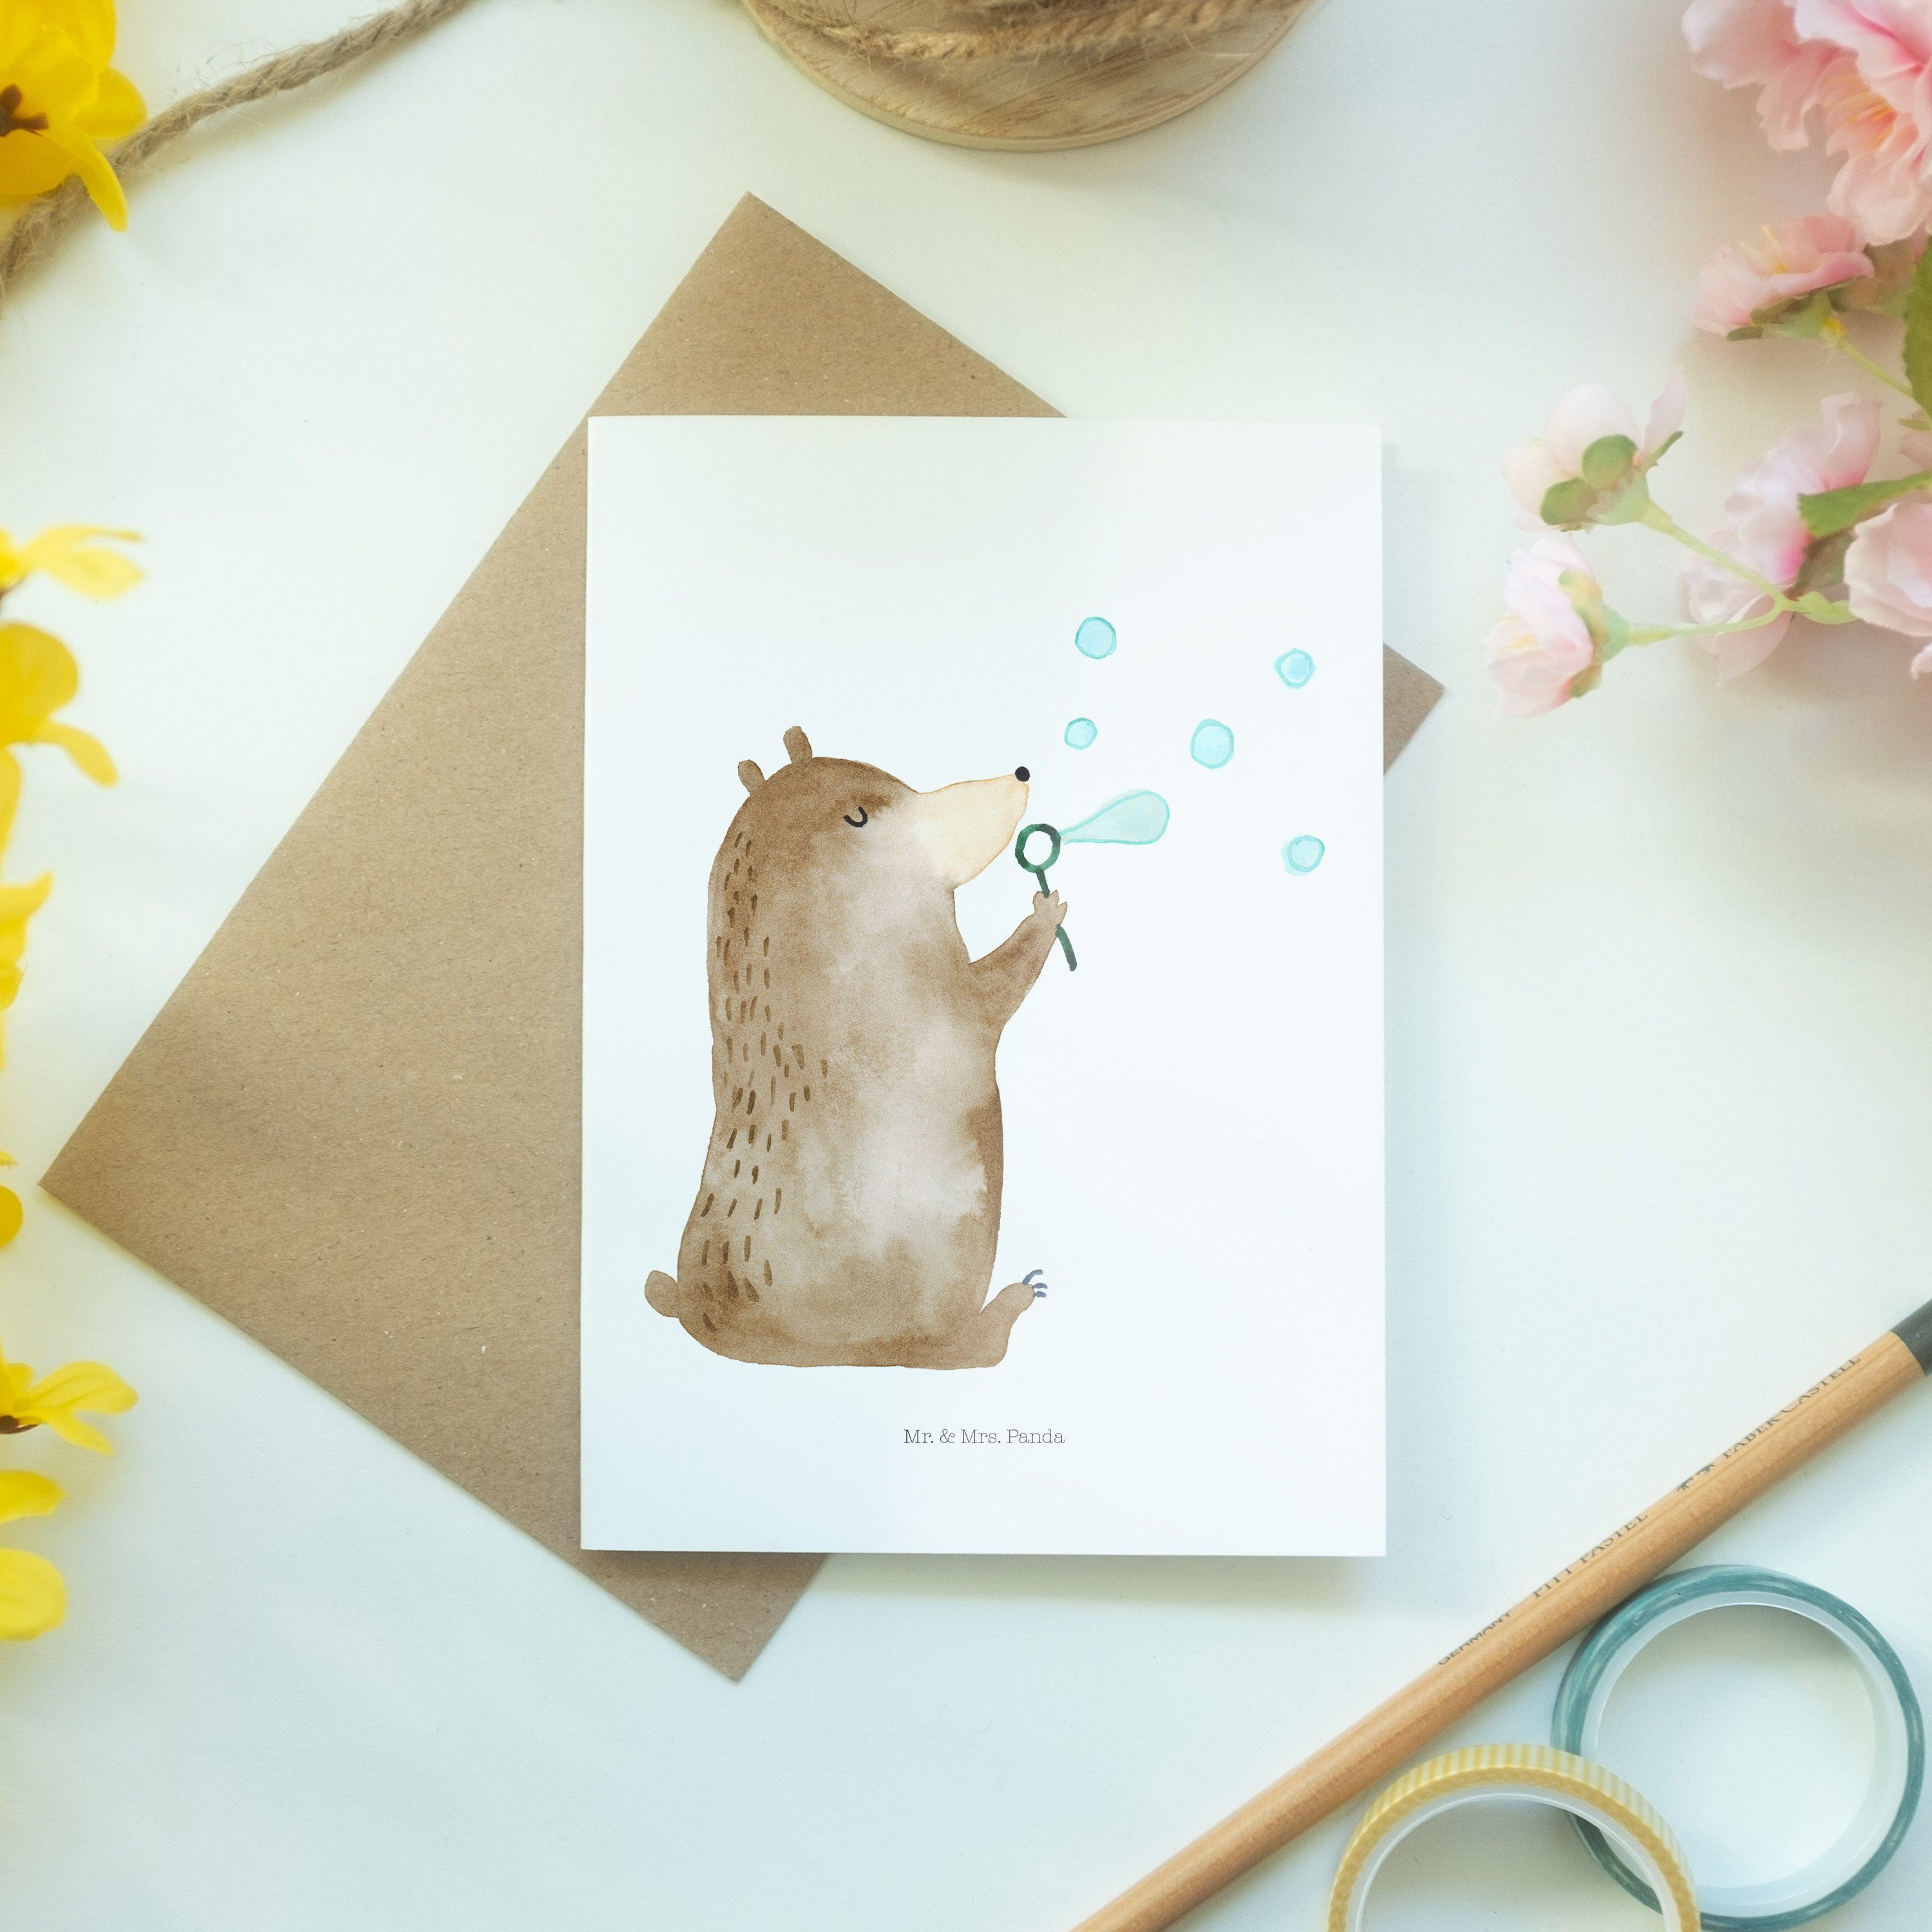 Mr. & Mrs. Panda Grußkarte - Teddybär, Seifenblasen Bär Karte Geschenk, Weiß Geburtstagskarte, 